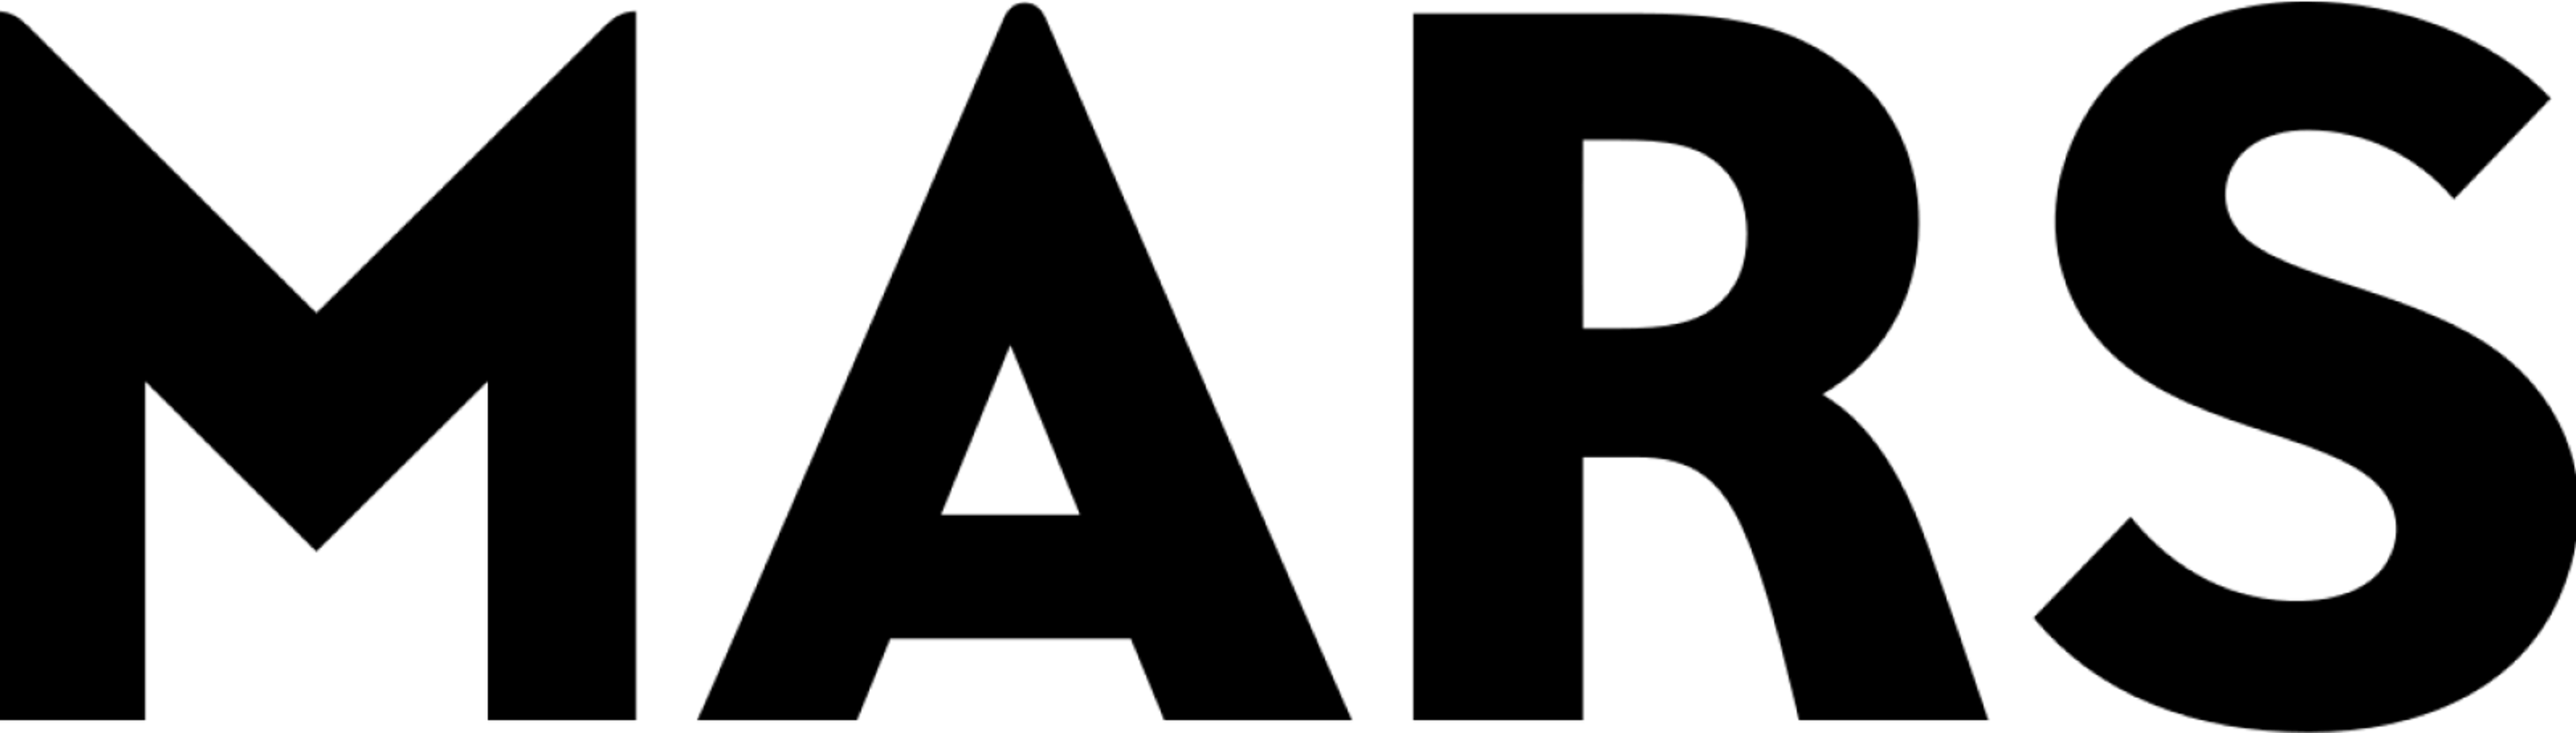 Mars logo in black on a transparent background